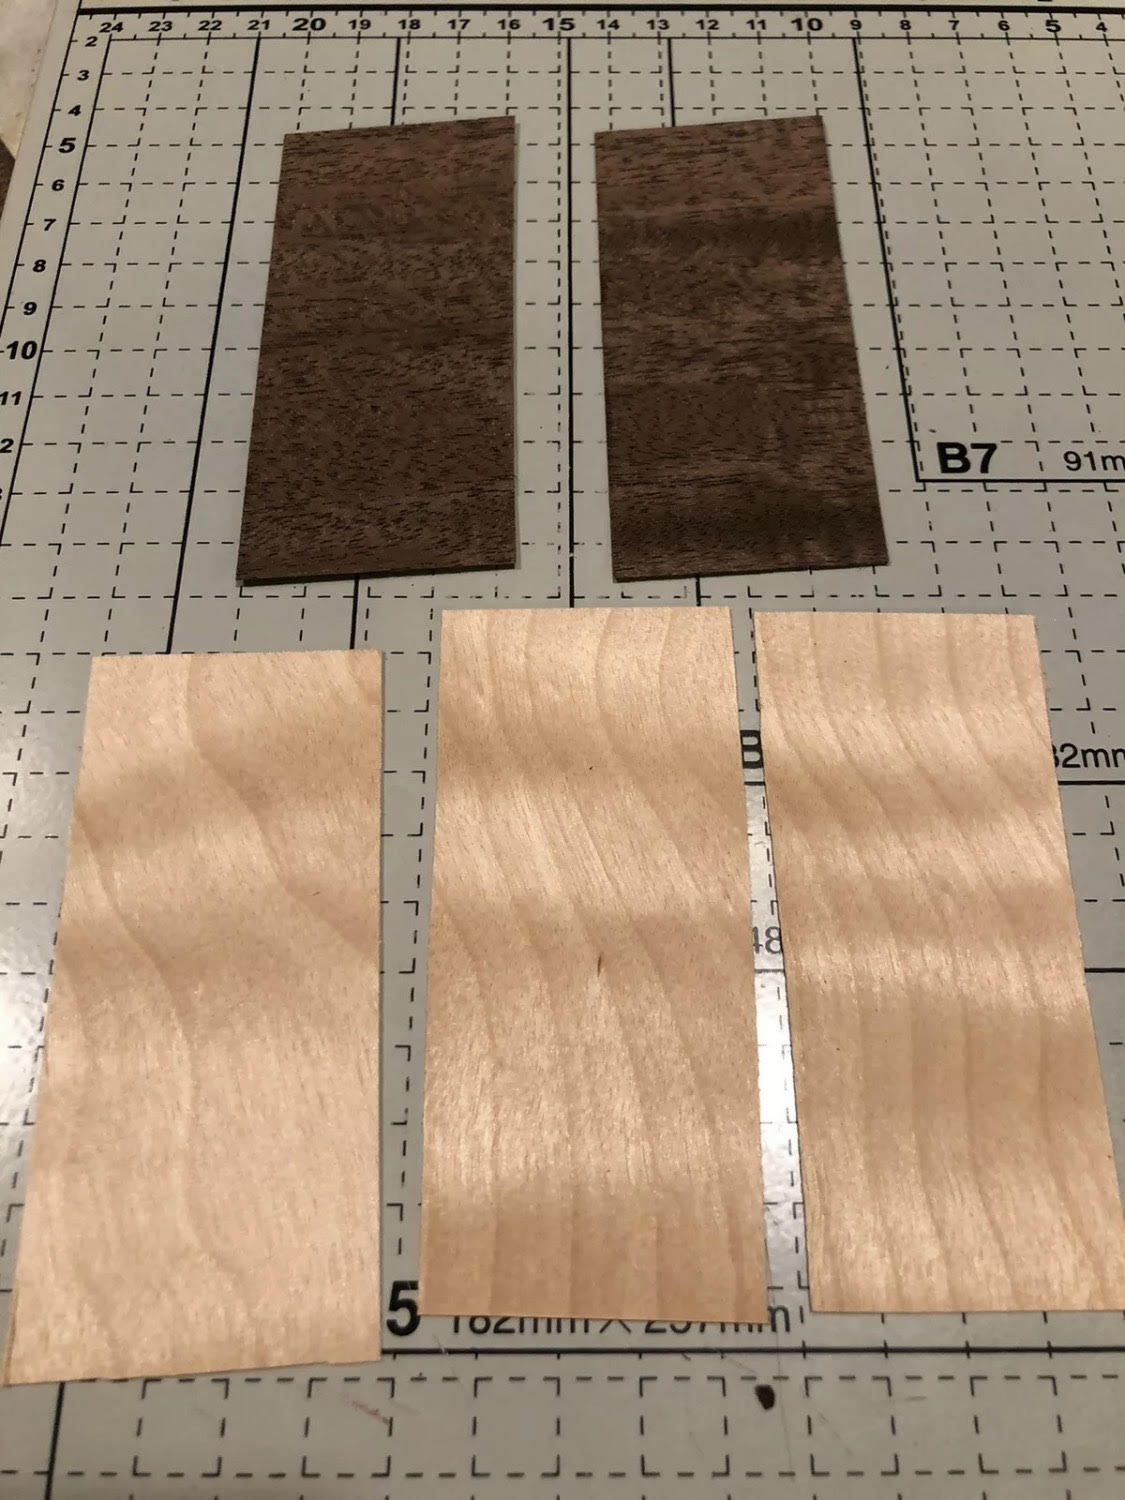 LC BOARDS Fingerboard Veneer Wood Pre Cut Curly Maple Ebony 5 plys 